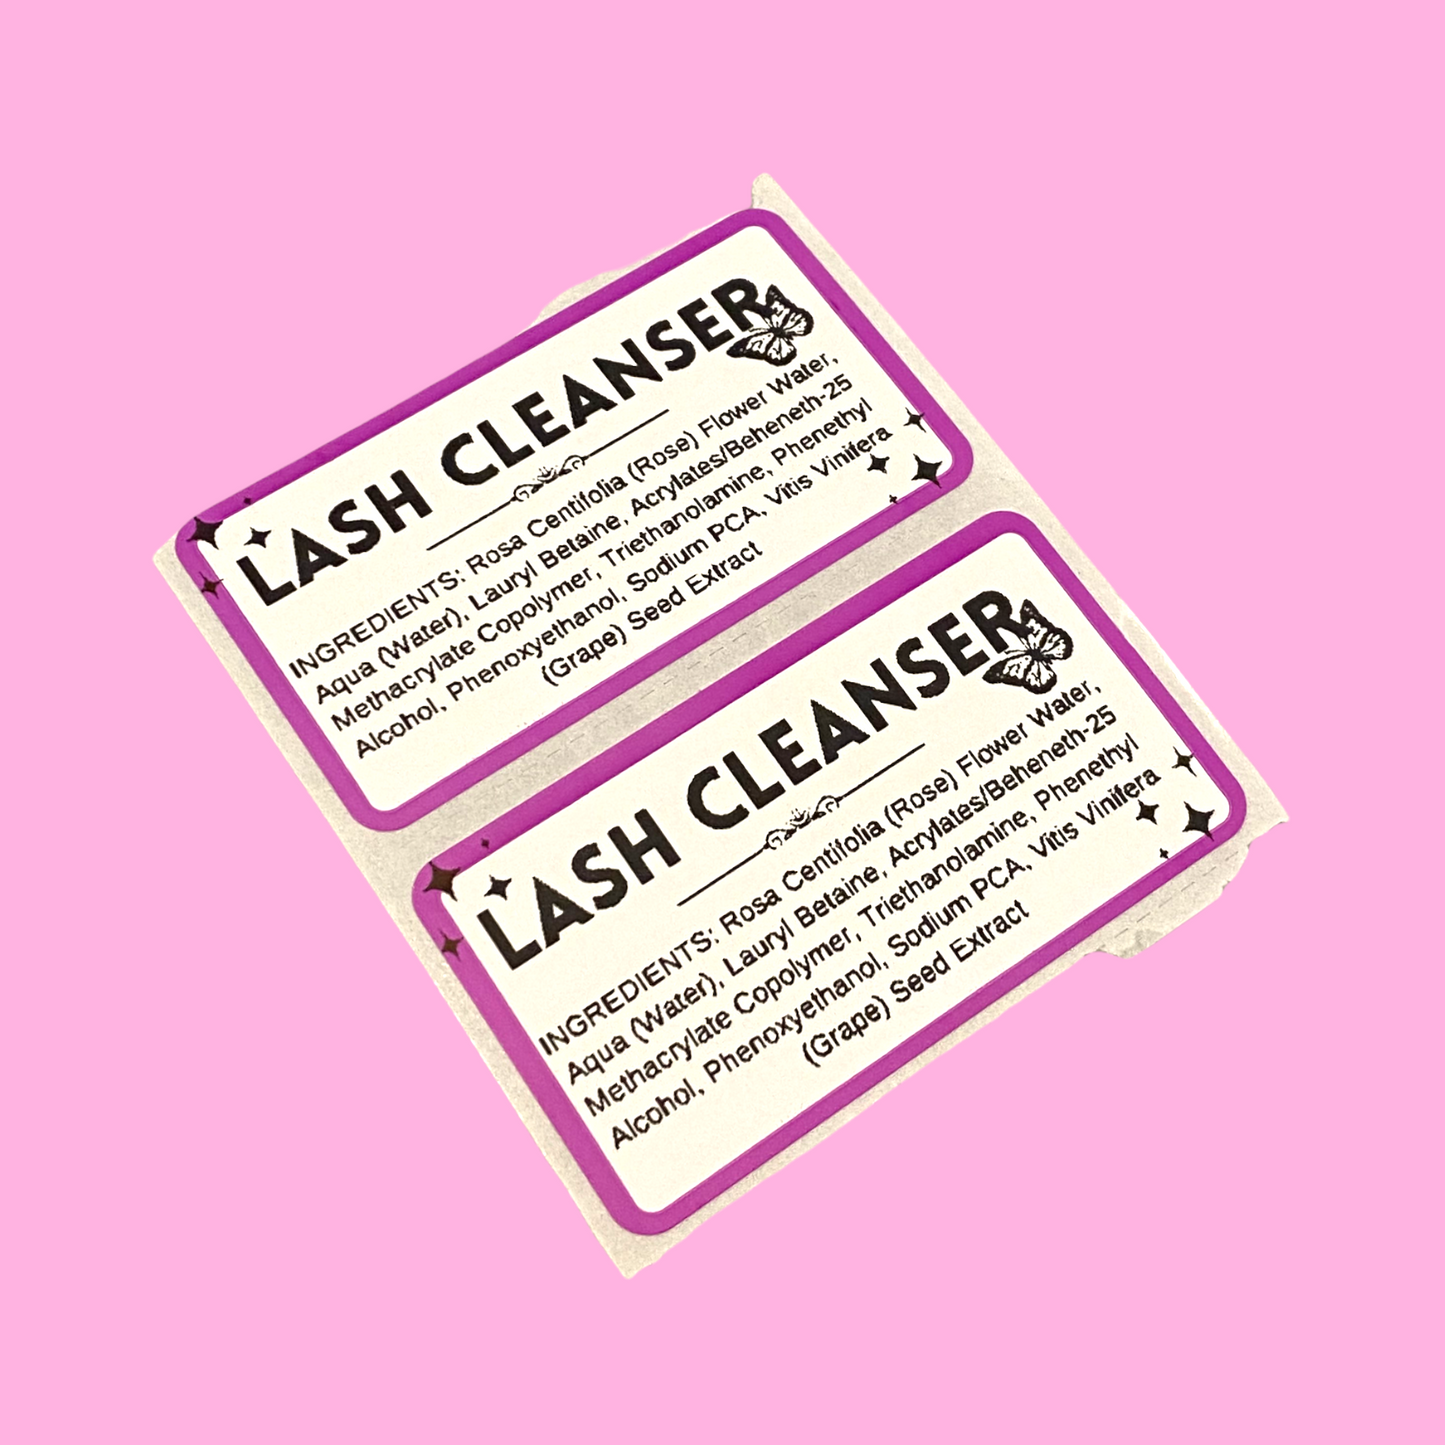 COLORED PROLONG LASH SHAMPOOI CLEANSER INGREDIENT LABELS